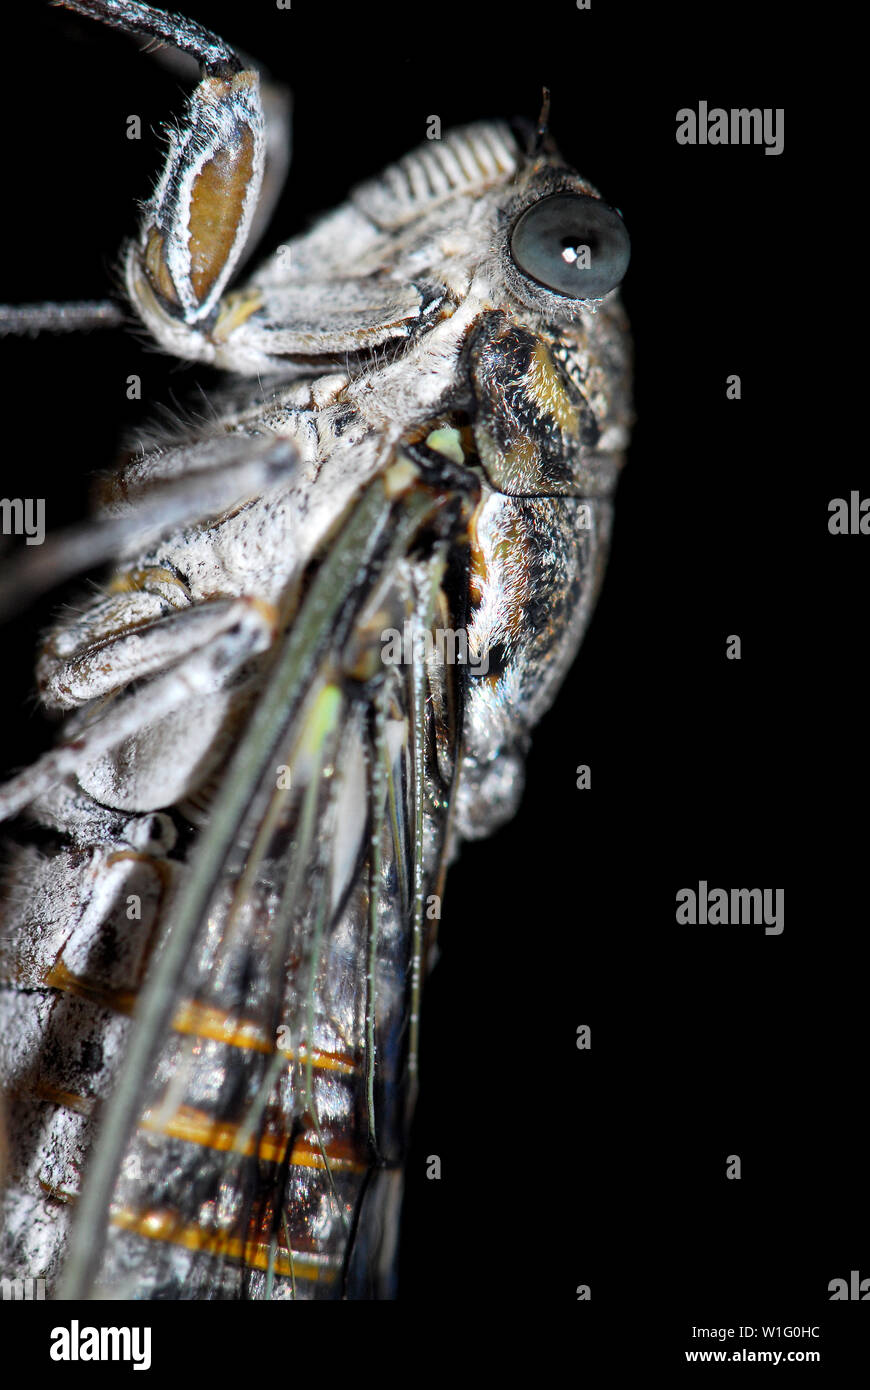 Cicada sp., Zikade Stock Photo